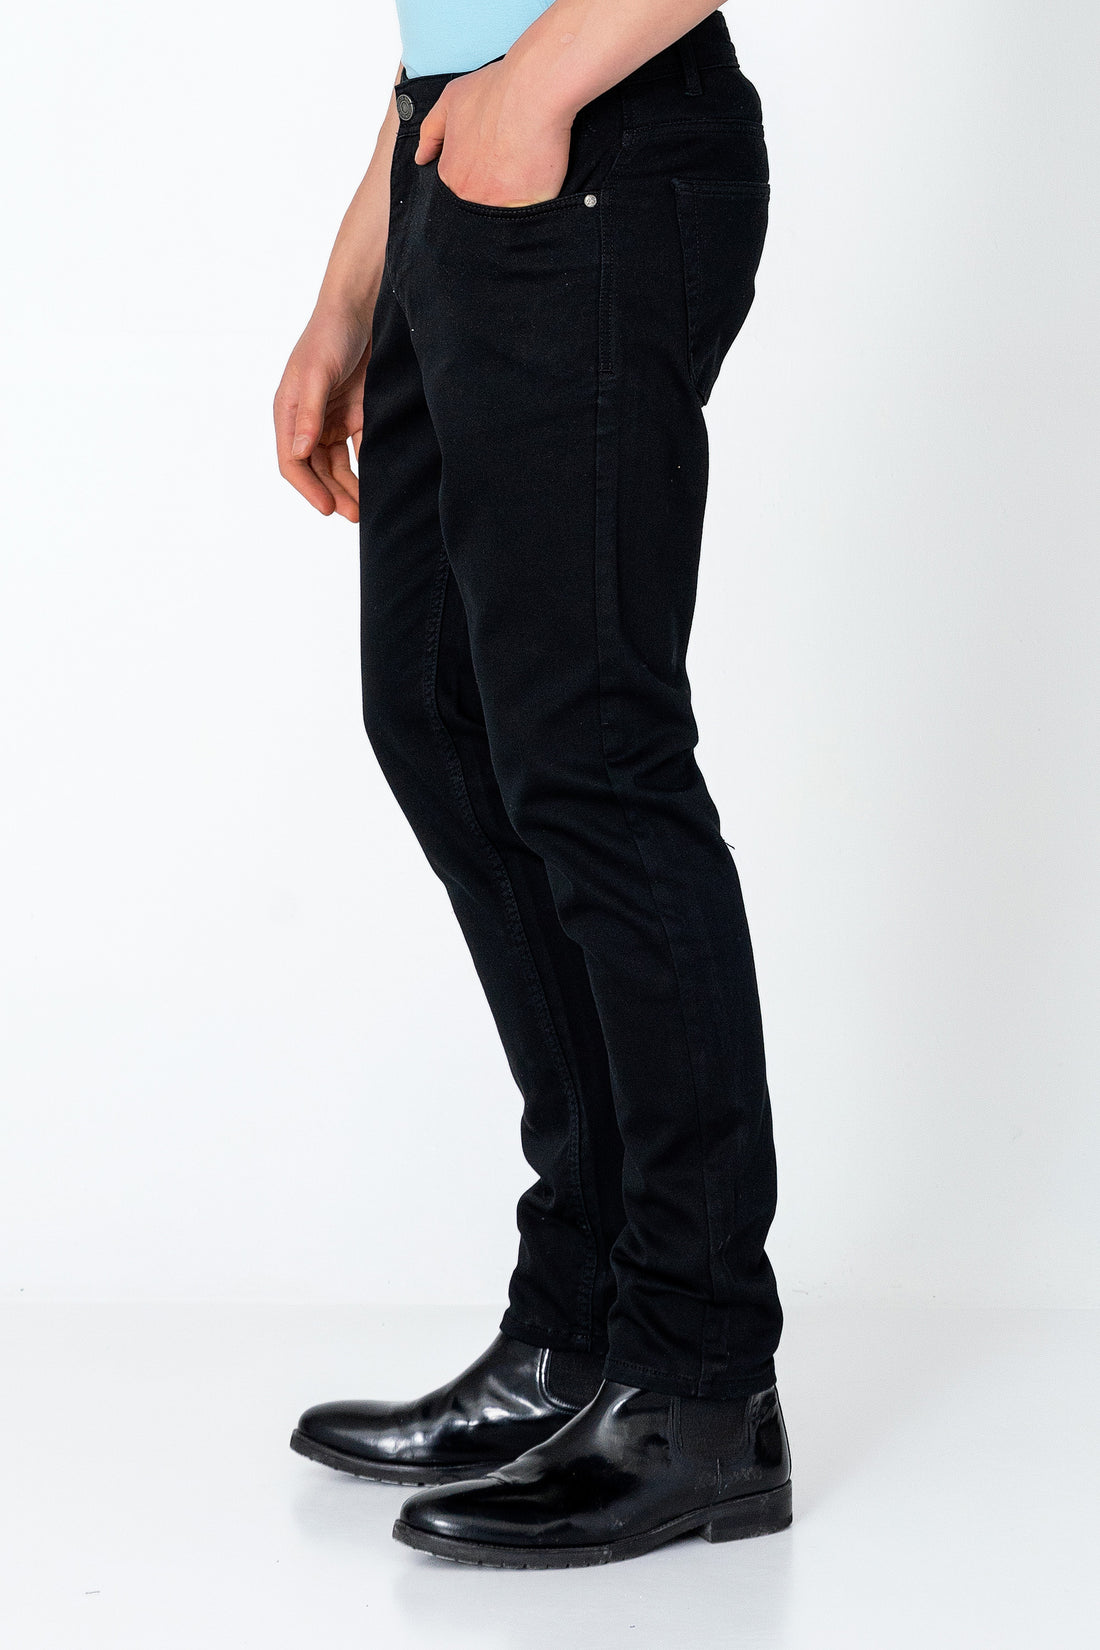 Super Soft 5-pocket Style Pants - Jet Black